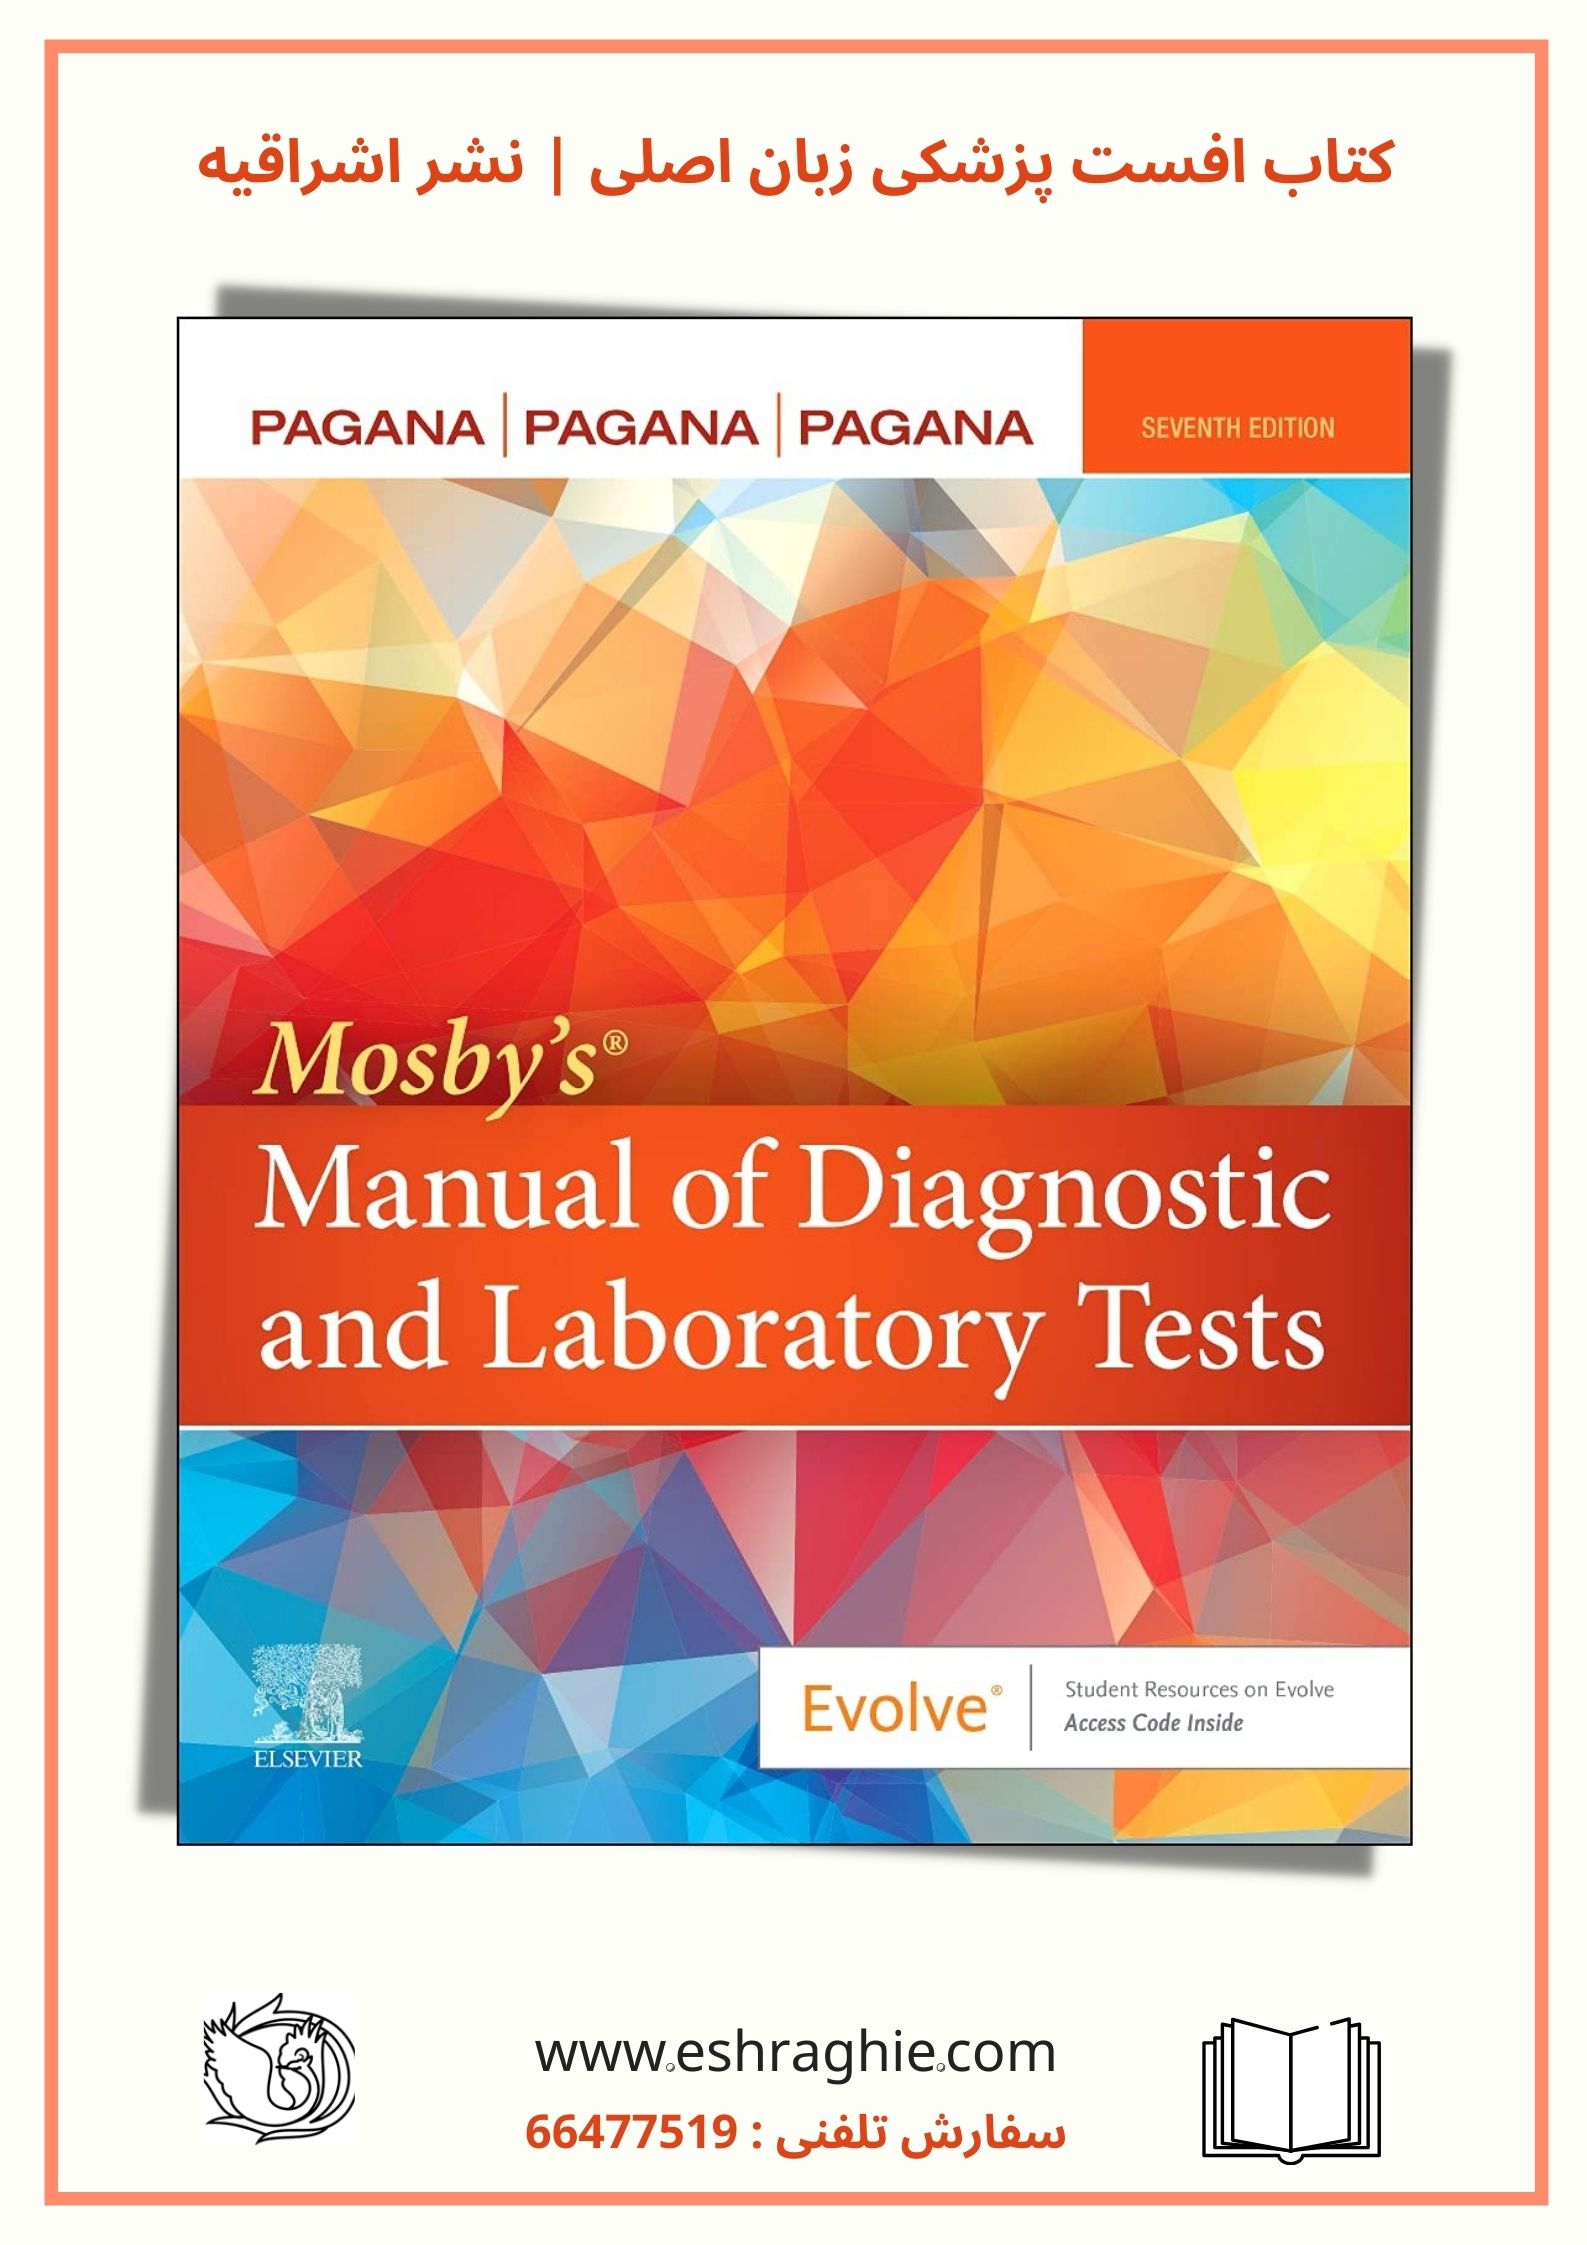 کتاب پاگانا | Mosby’s® Manual of Diagnostic and Laboratory Tests 7th Edition